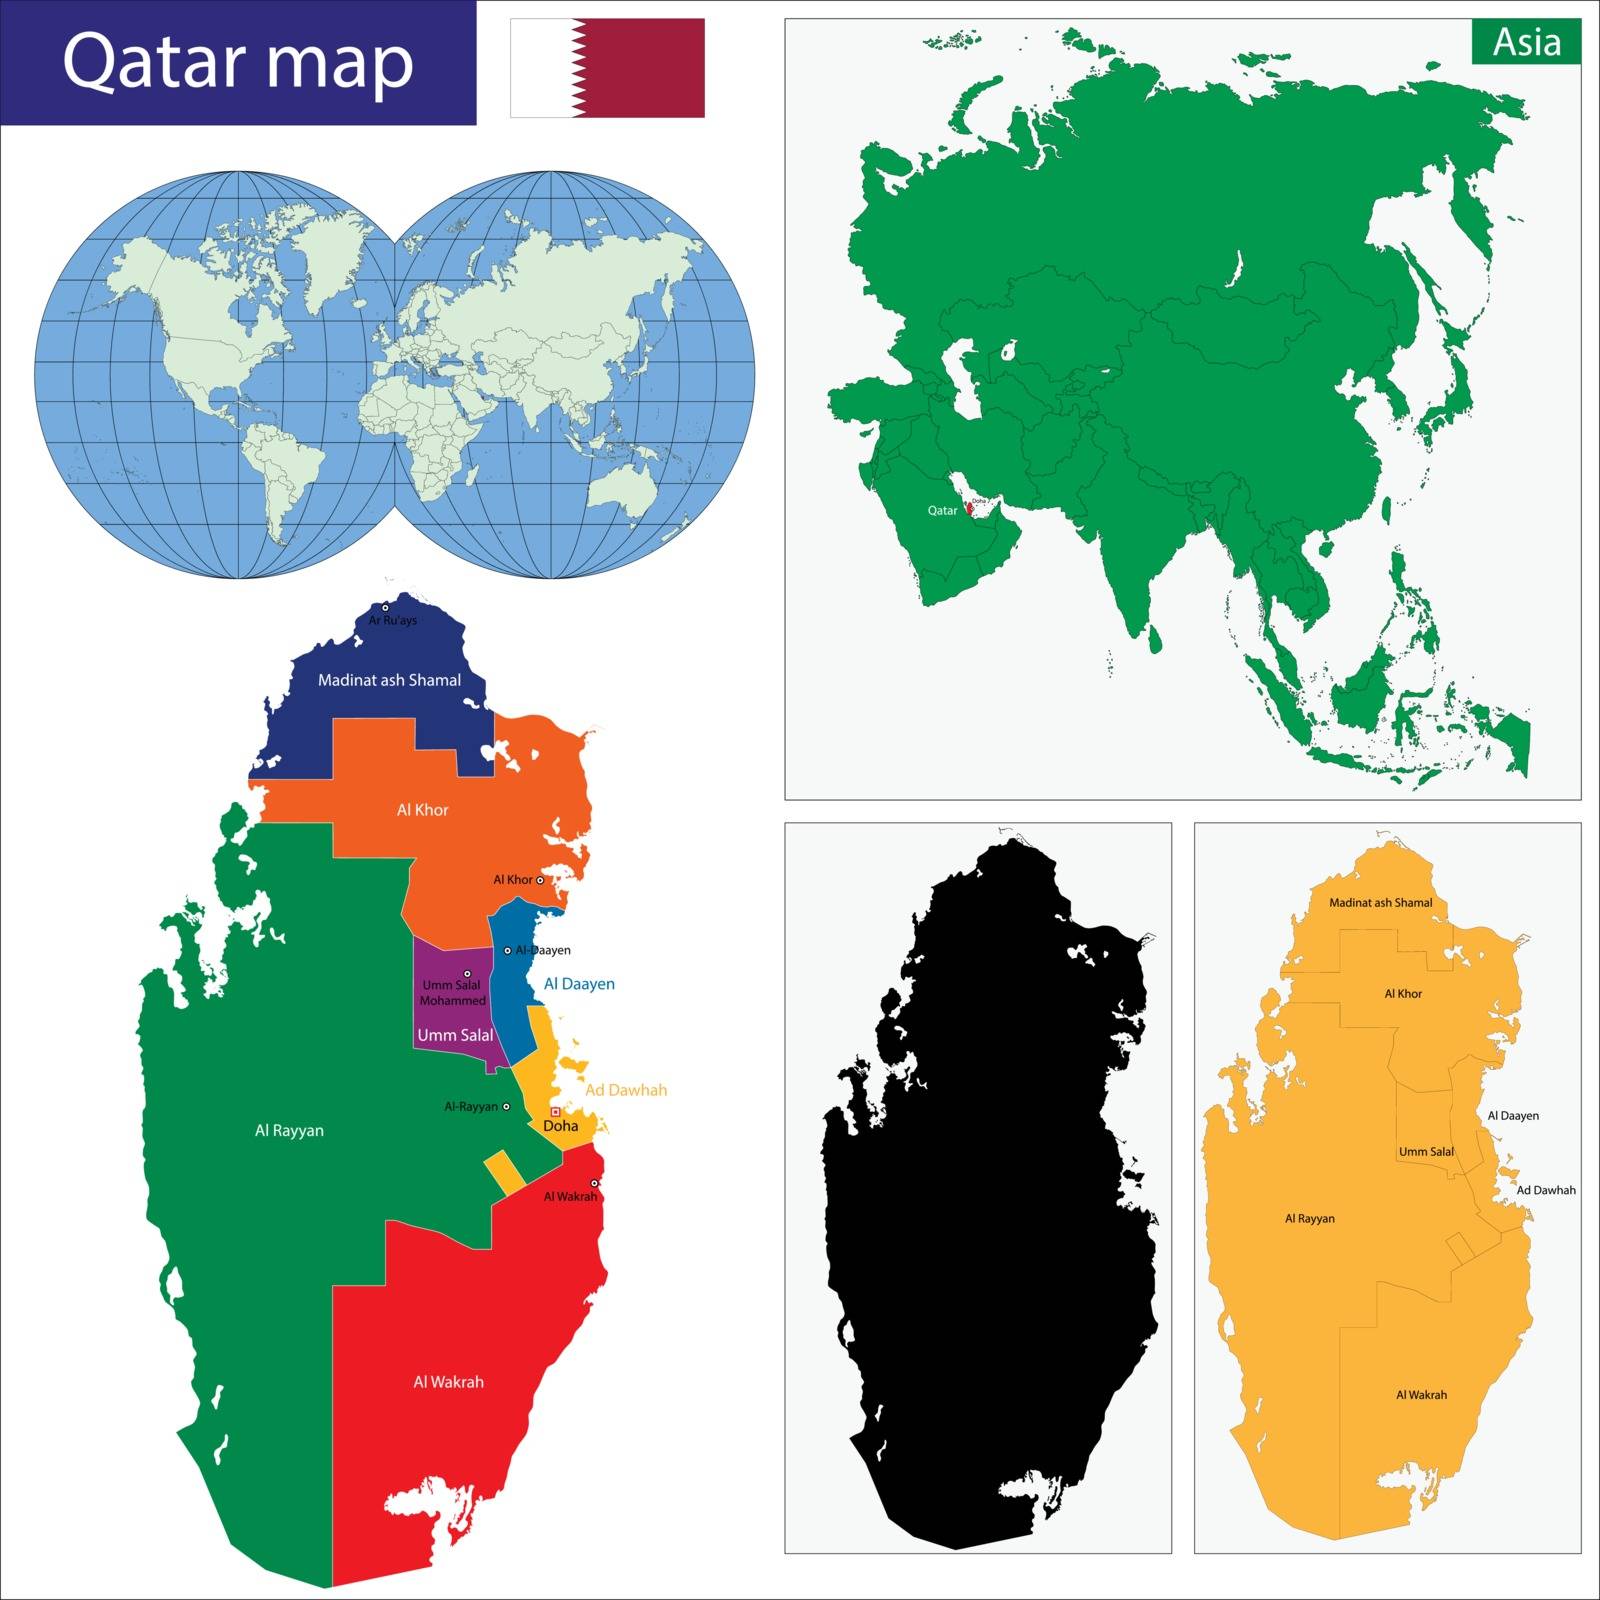 Qatar map by Volina